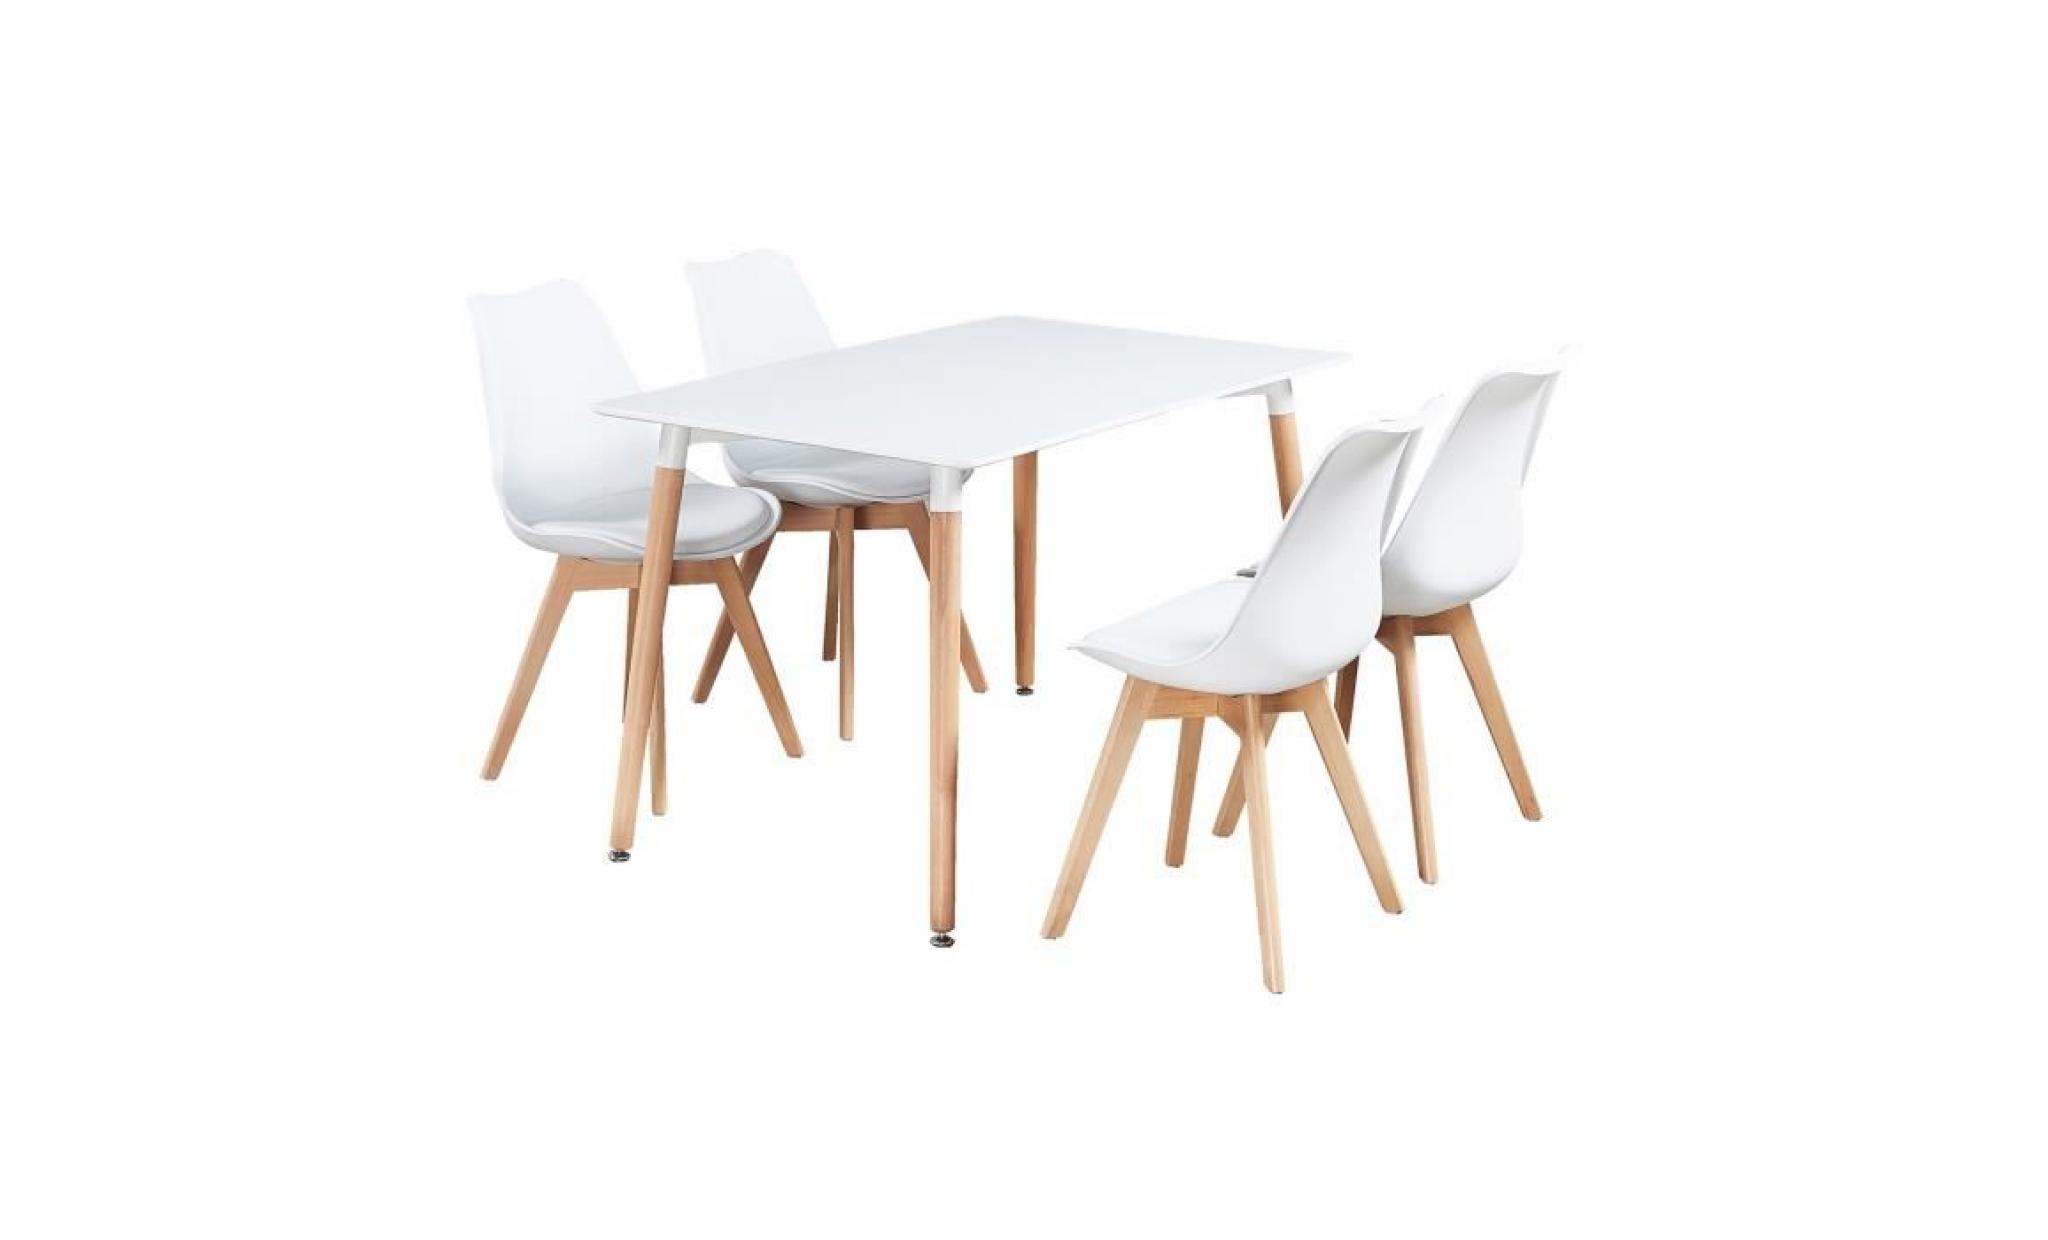 ensemble salle à manger moderne lorenzo   table blanche + 4 chaises blanches   design scandinave